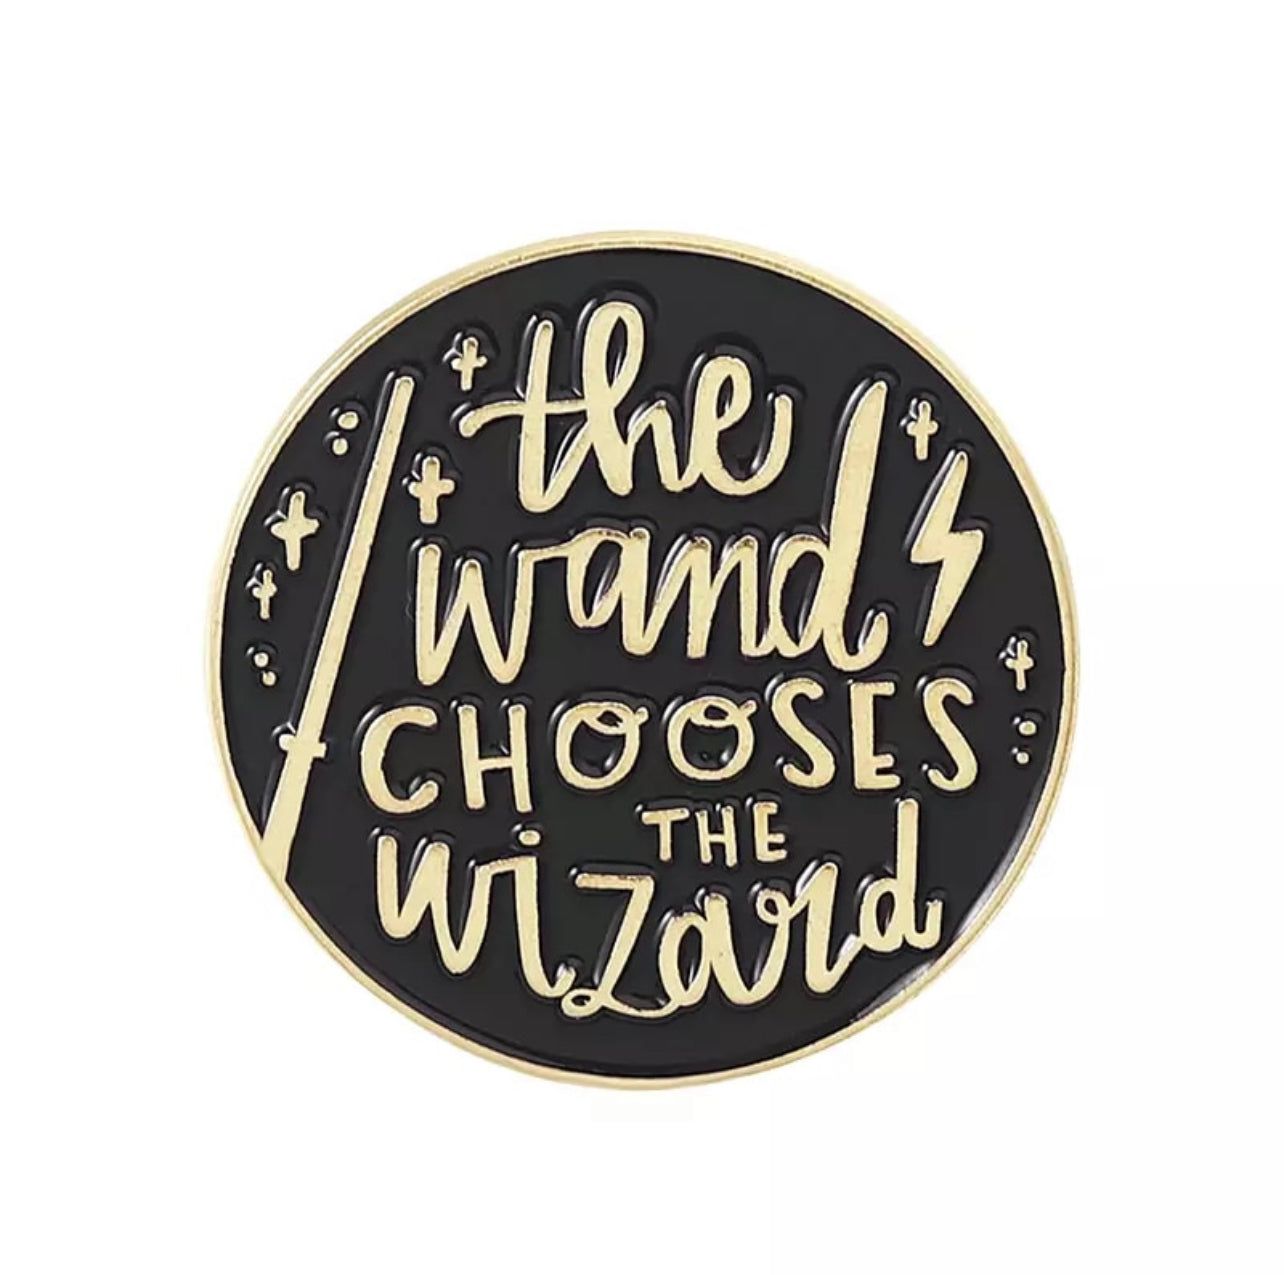 Wand chooses